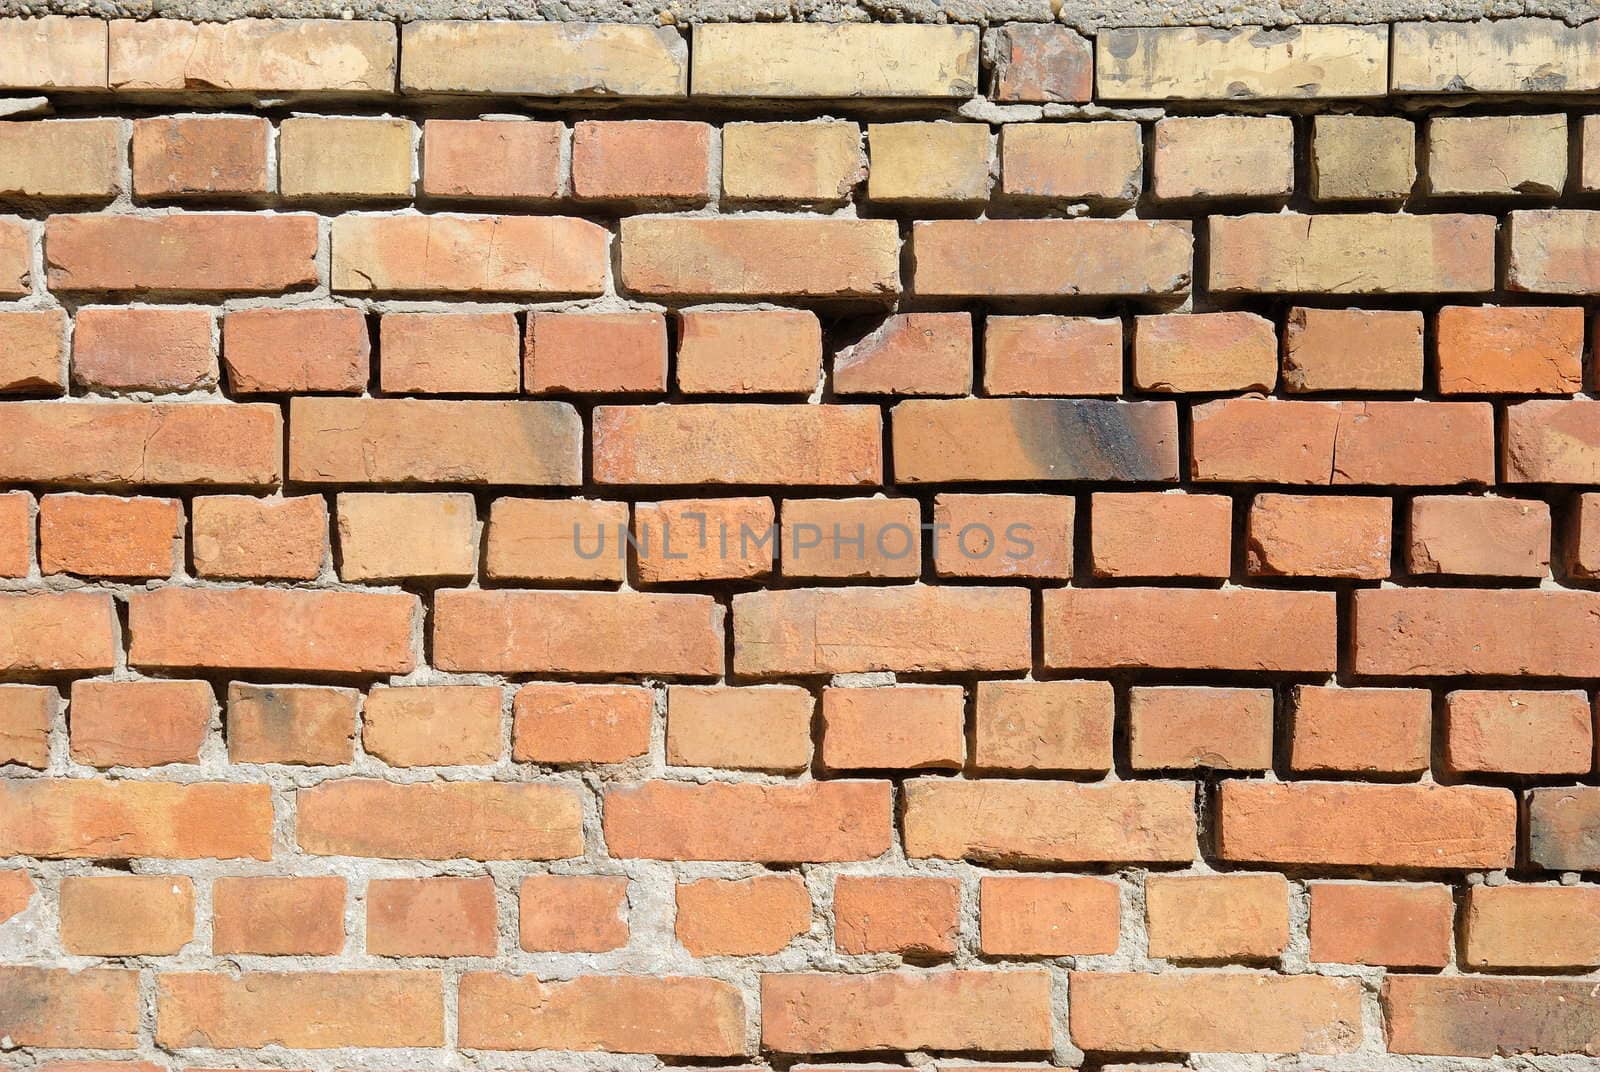 Urban decay wall texture with clay bricks